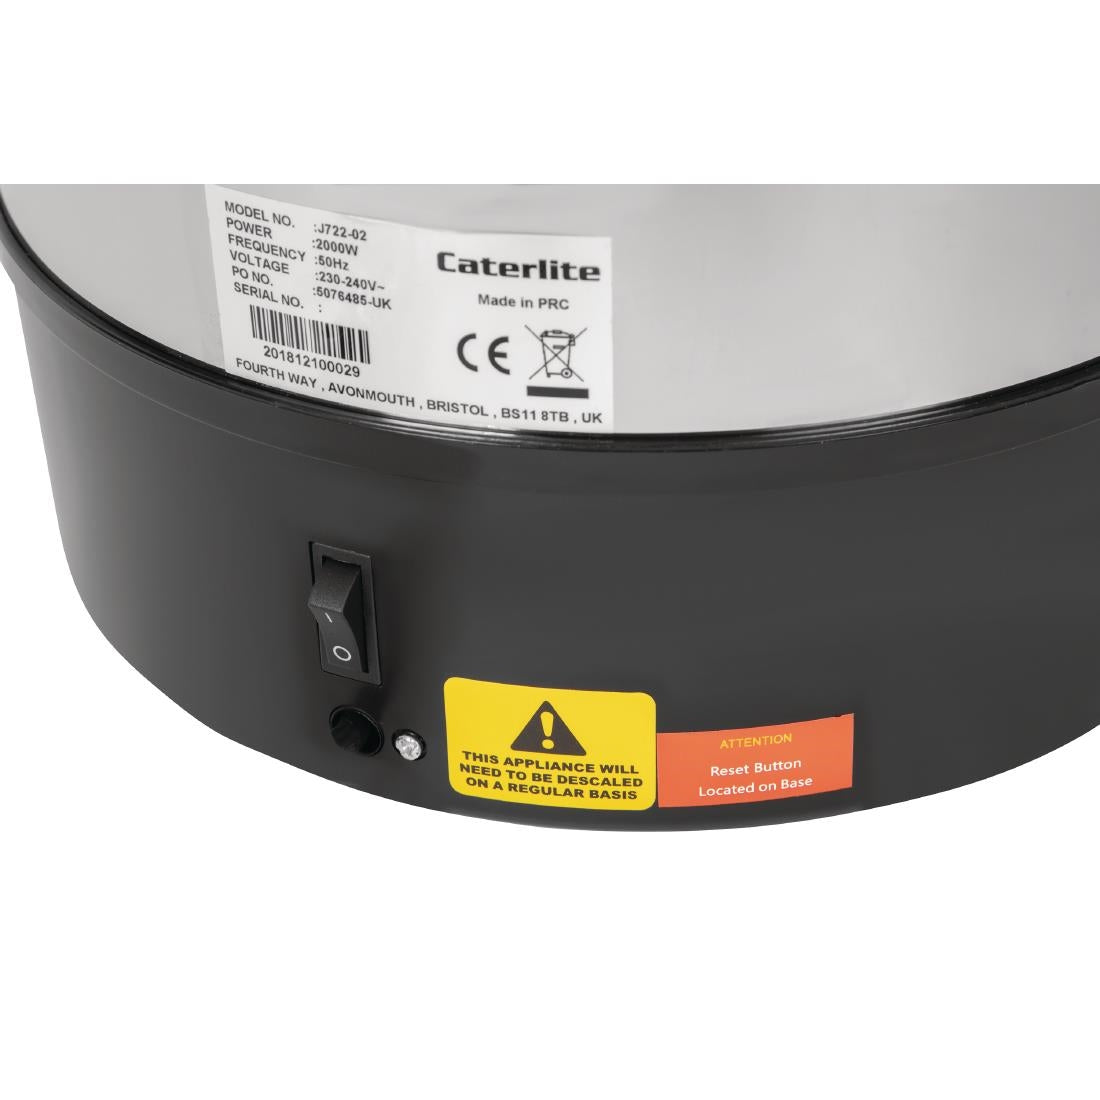 Caterlite Water Boiler 20Ltr JD Catering Equipment Solutions Ltd